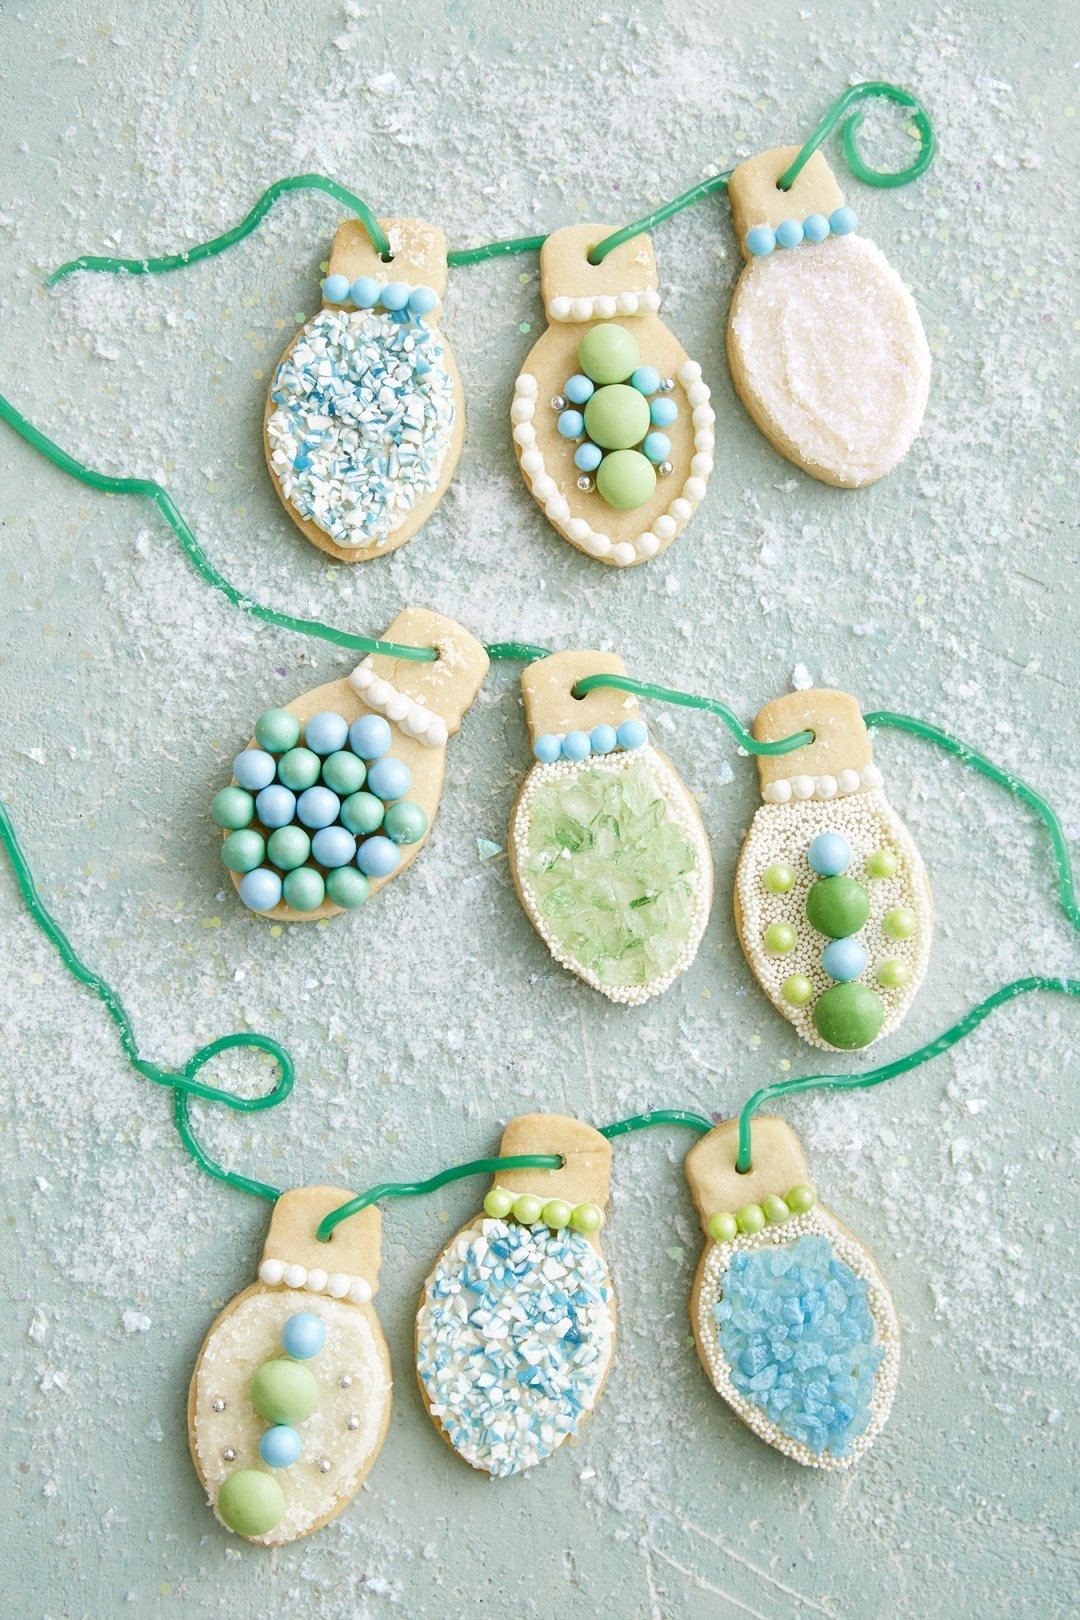 Christmas Decoratingristmas Cookies Recipes Images Of Decorated Sugar  Cookiesdecorated Shippeddecorated Gift Basketdecorated Ideas Decorated  Christmas